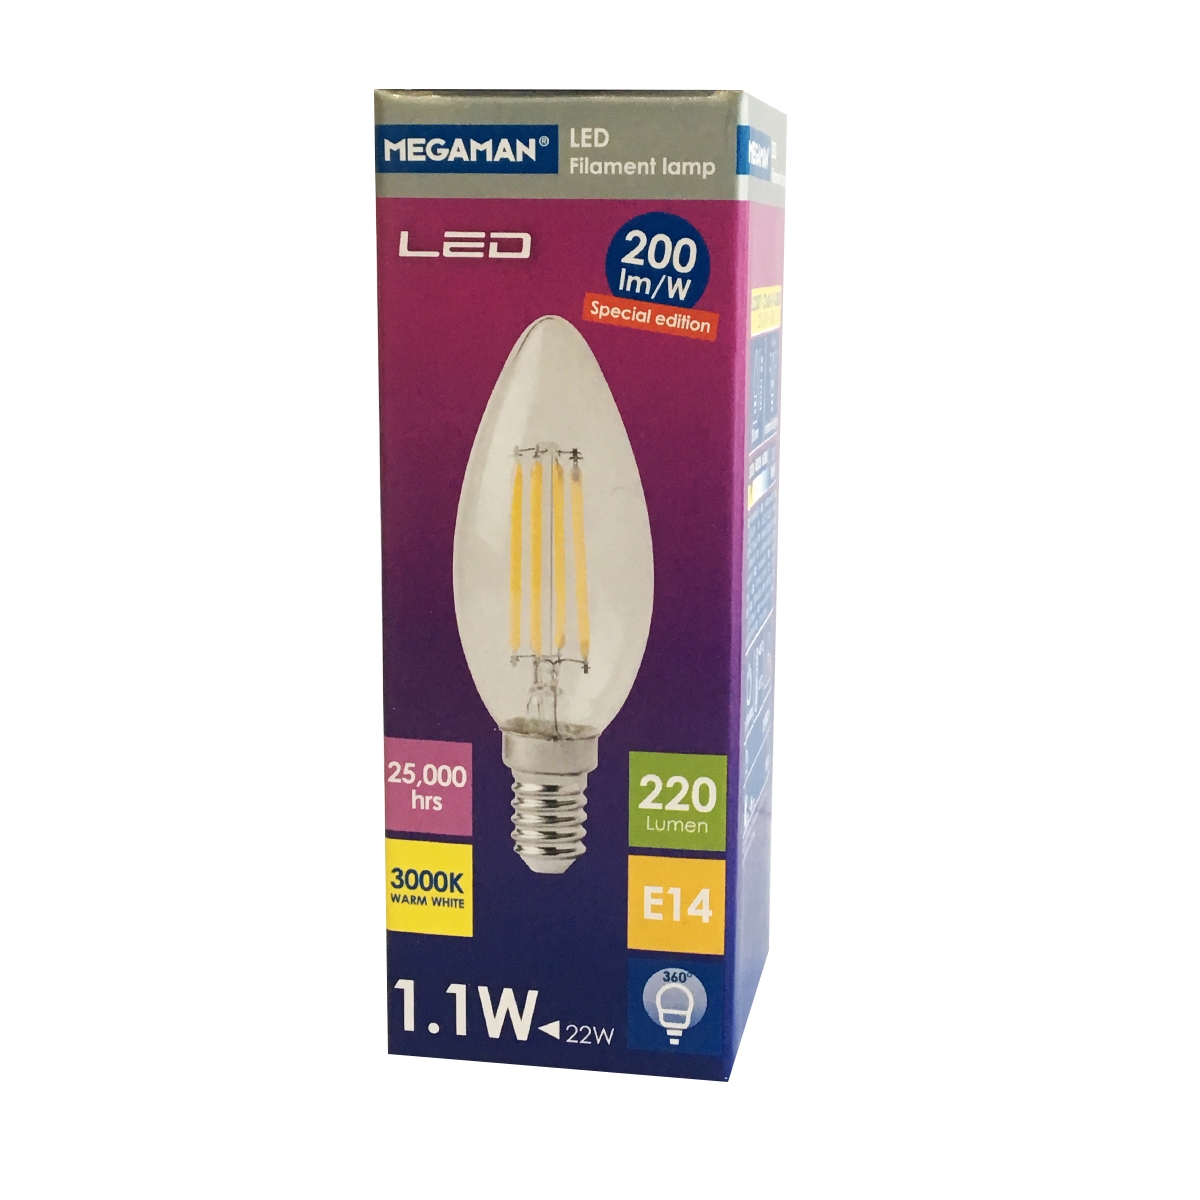 Megaman E14 Special Edition LED Candle Filament Bulb LC203011-CSv00 1.1W 3000K - Warm White 